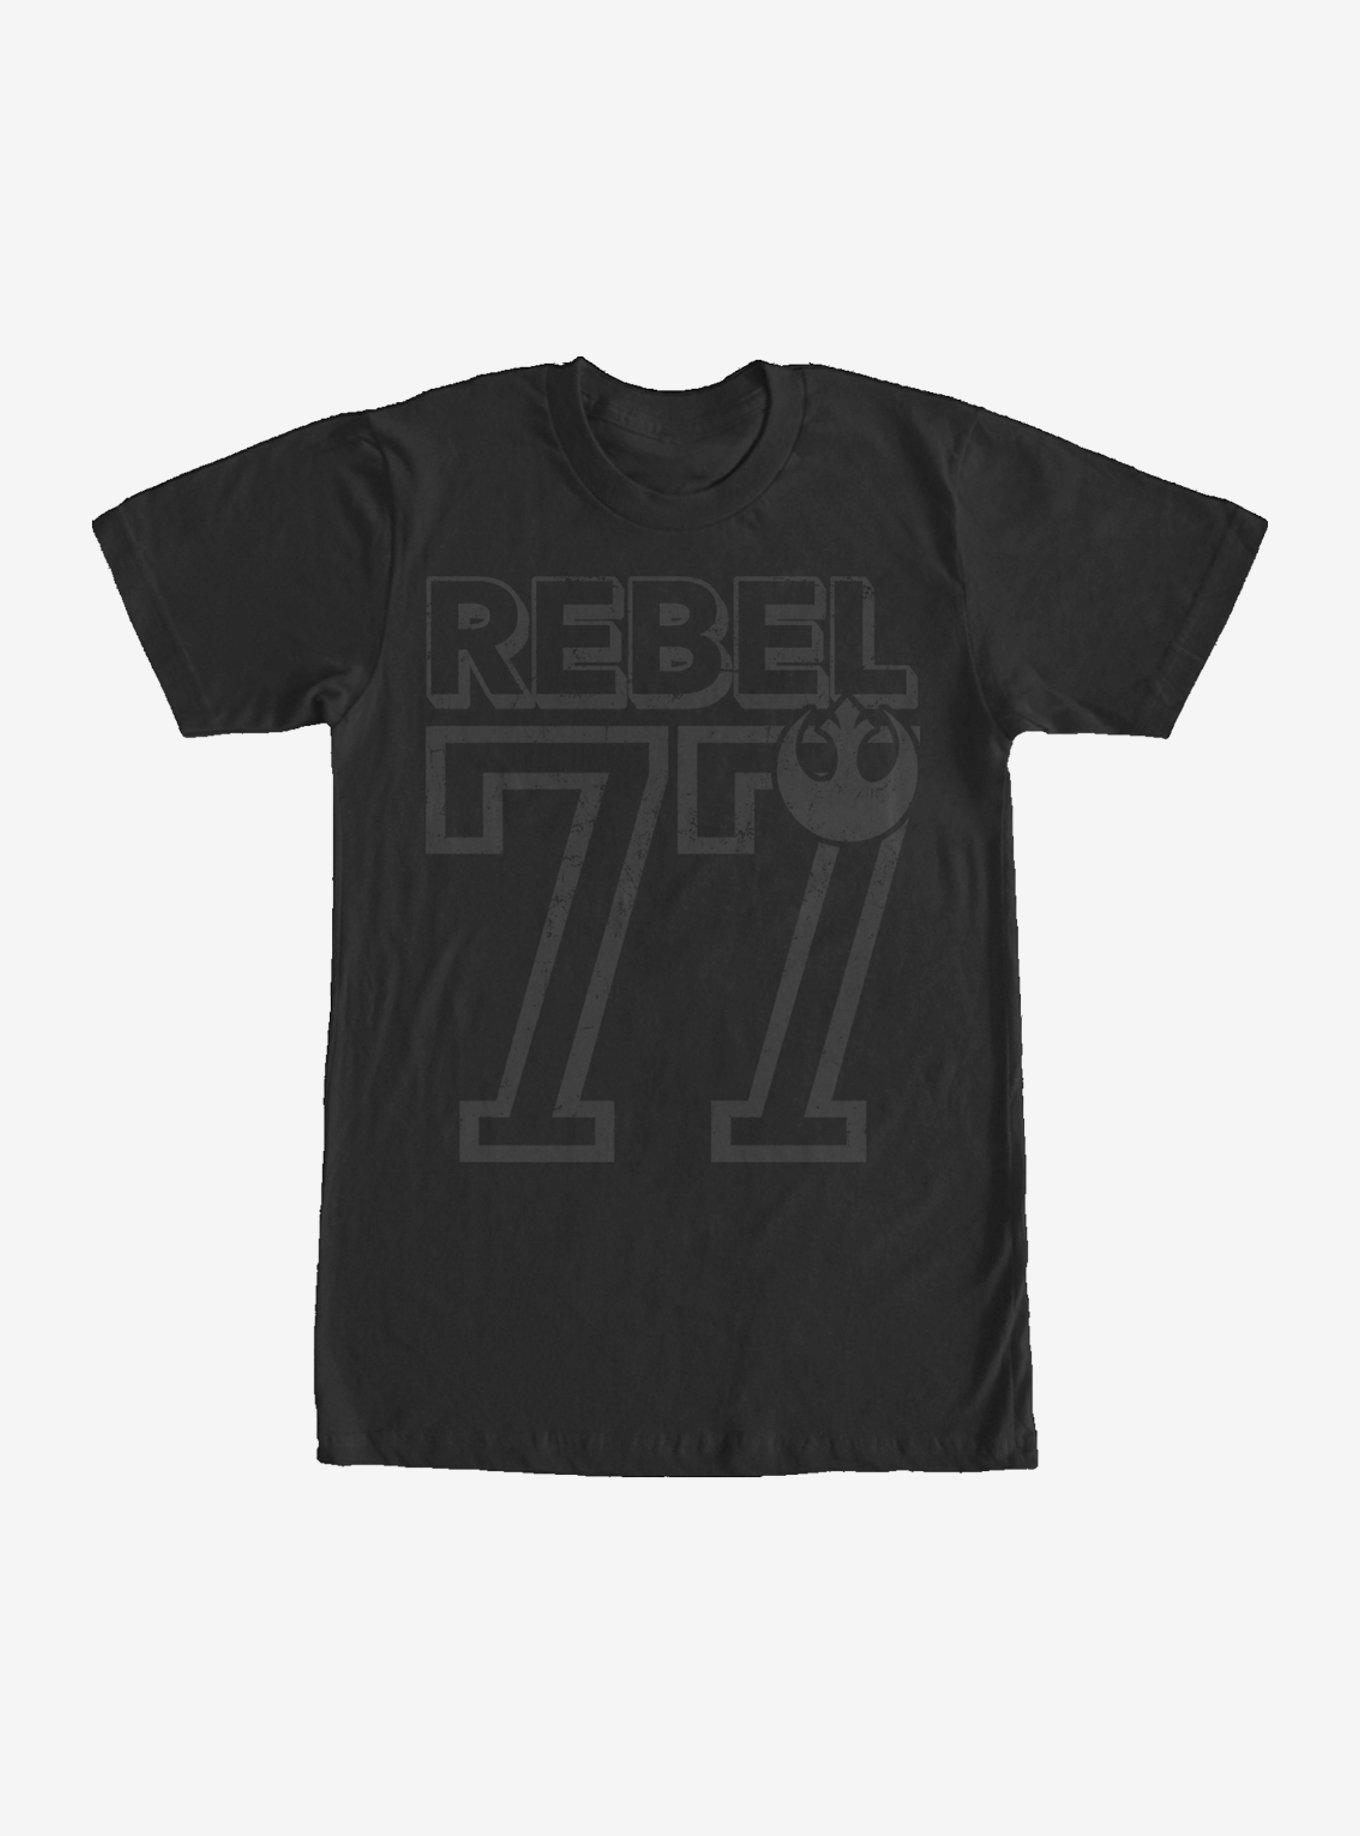 Star Wars Rebel 77 T-Shirt